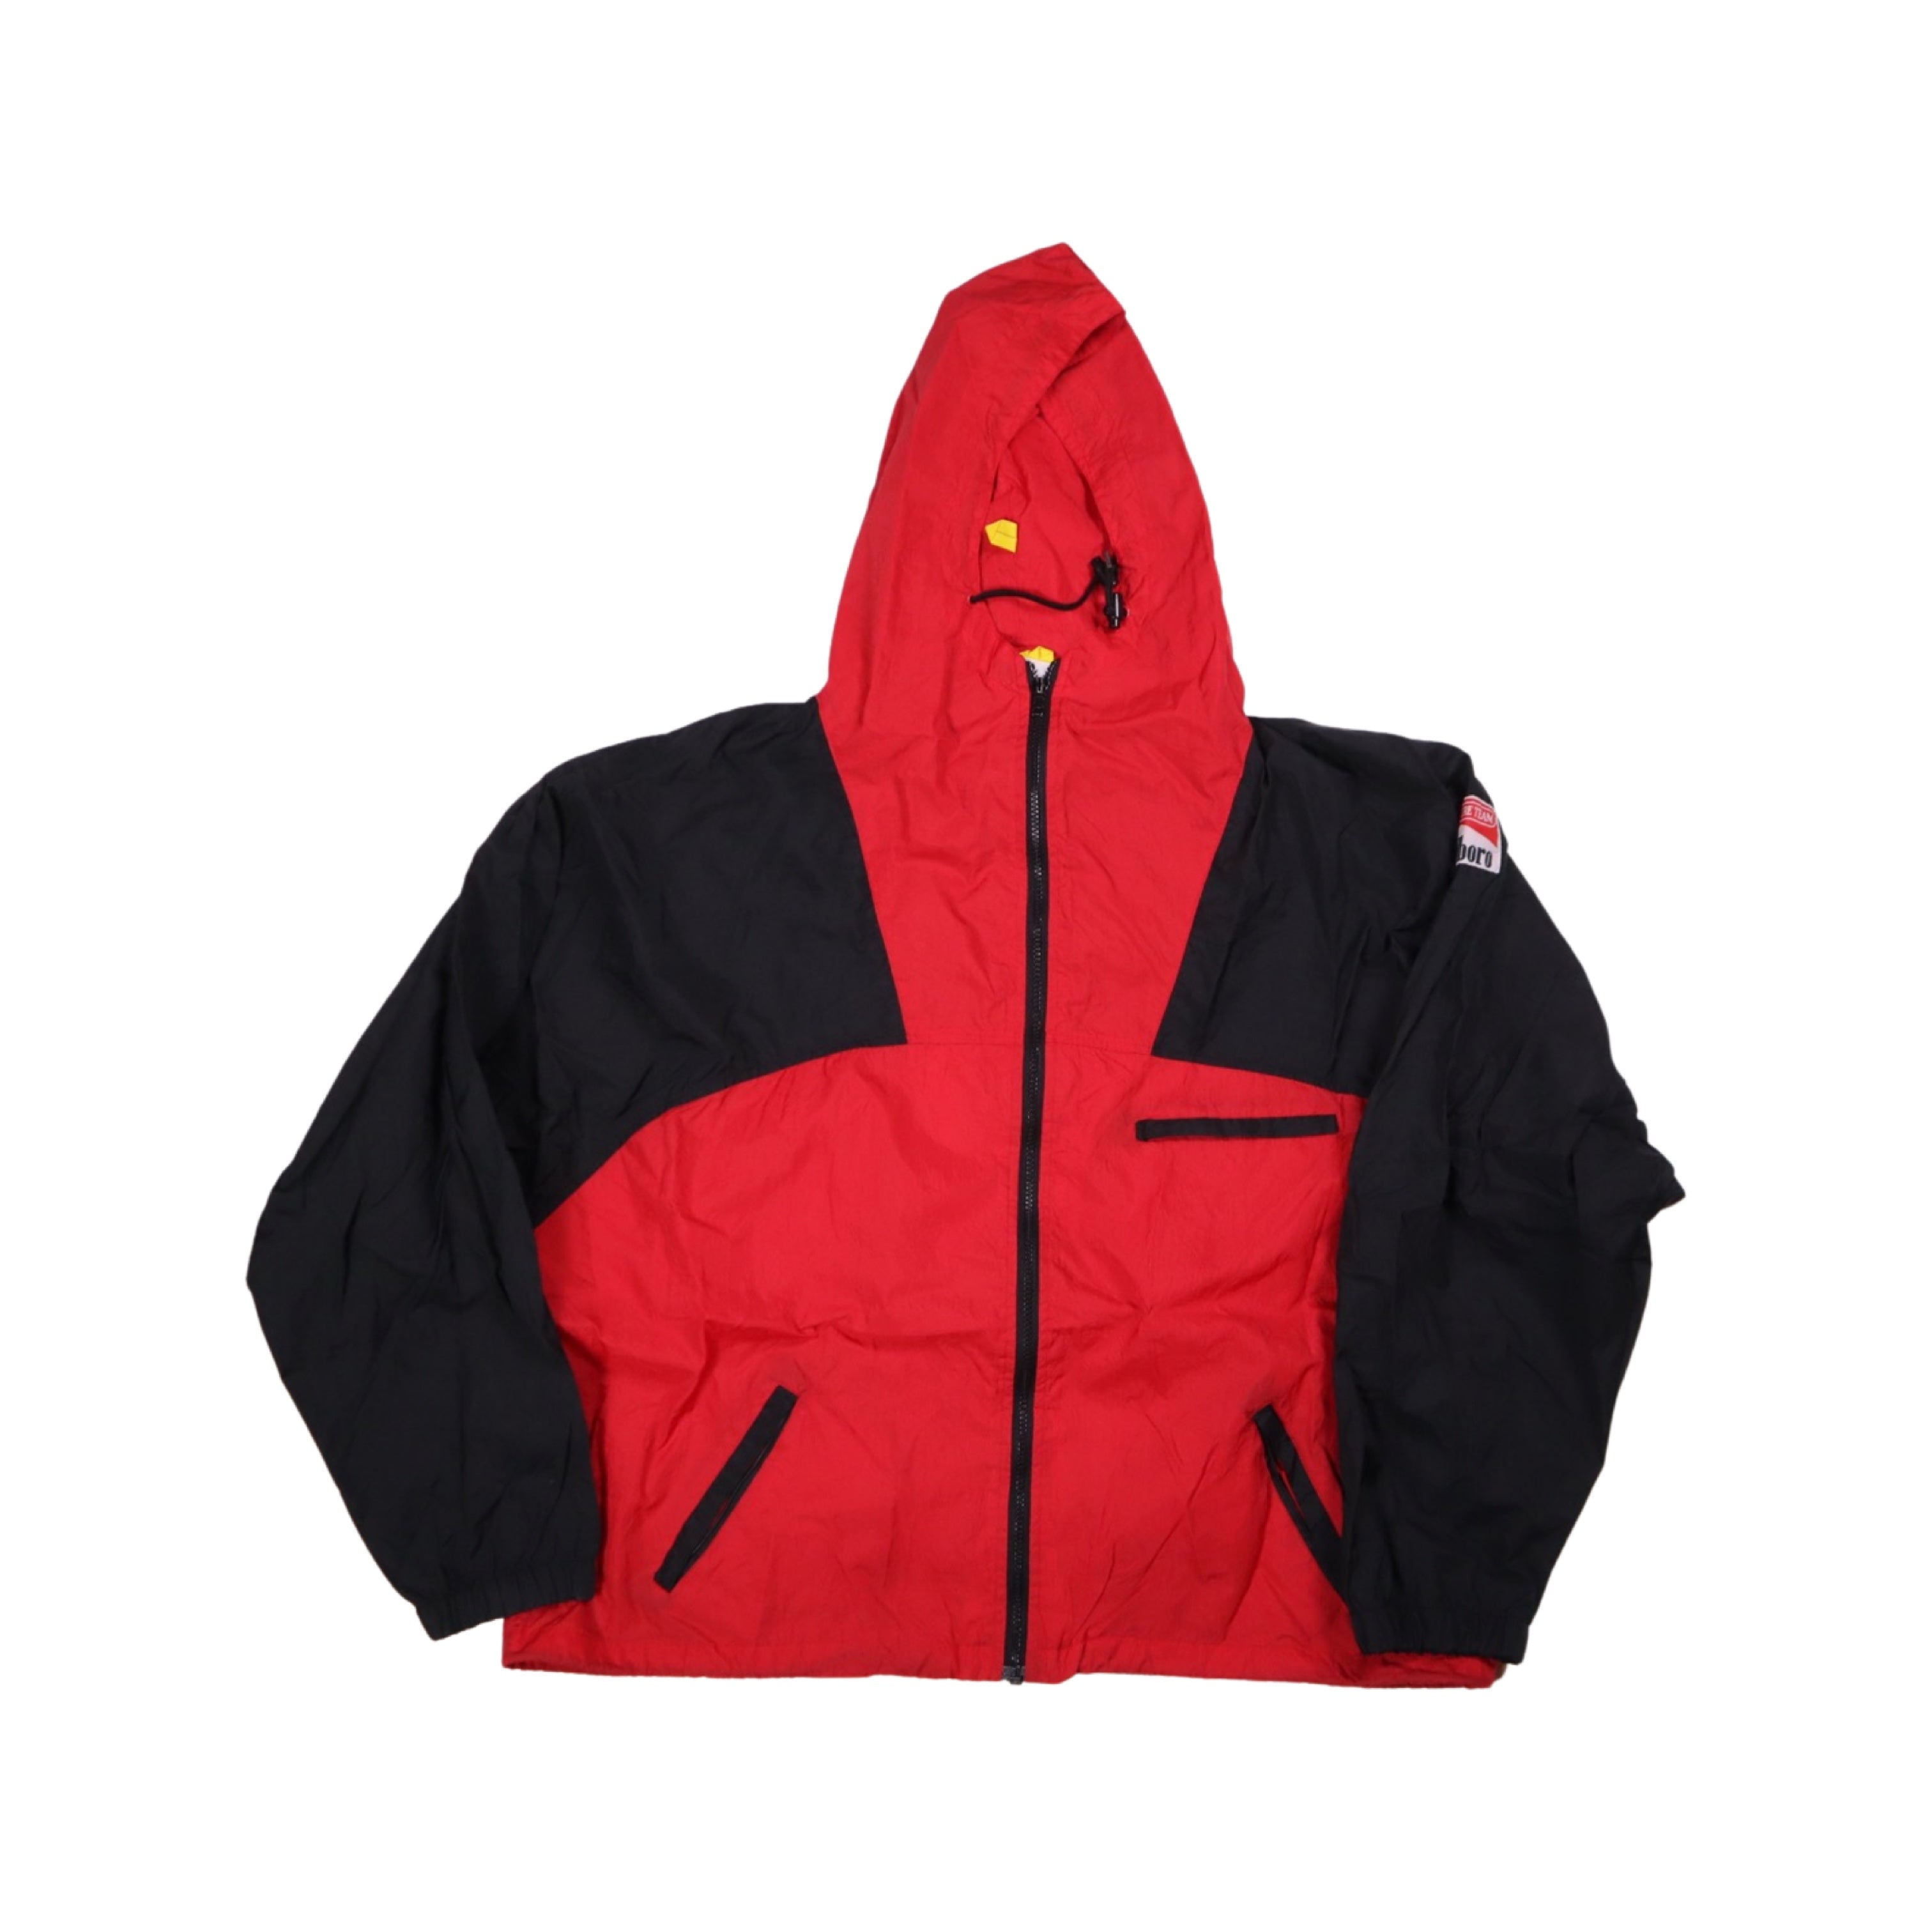 Red Marlboro Jacket 90s (XL)